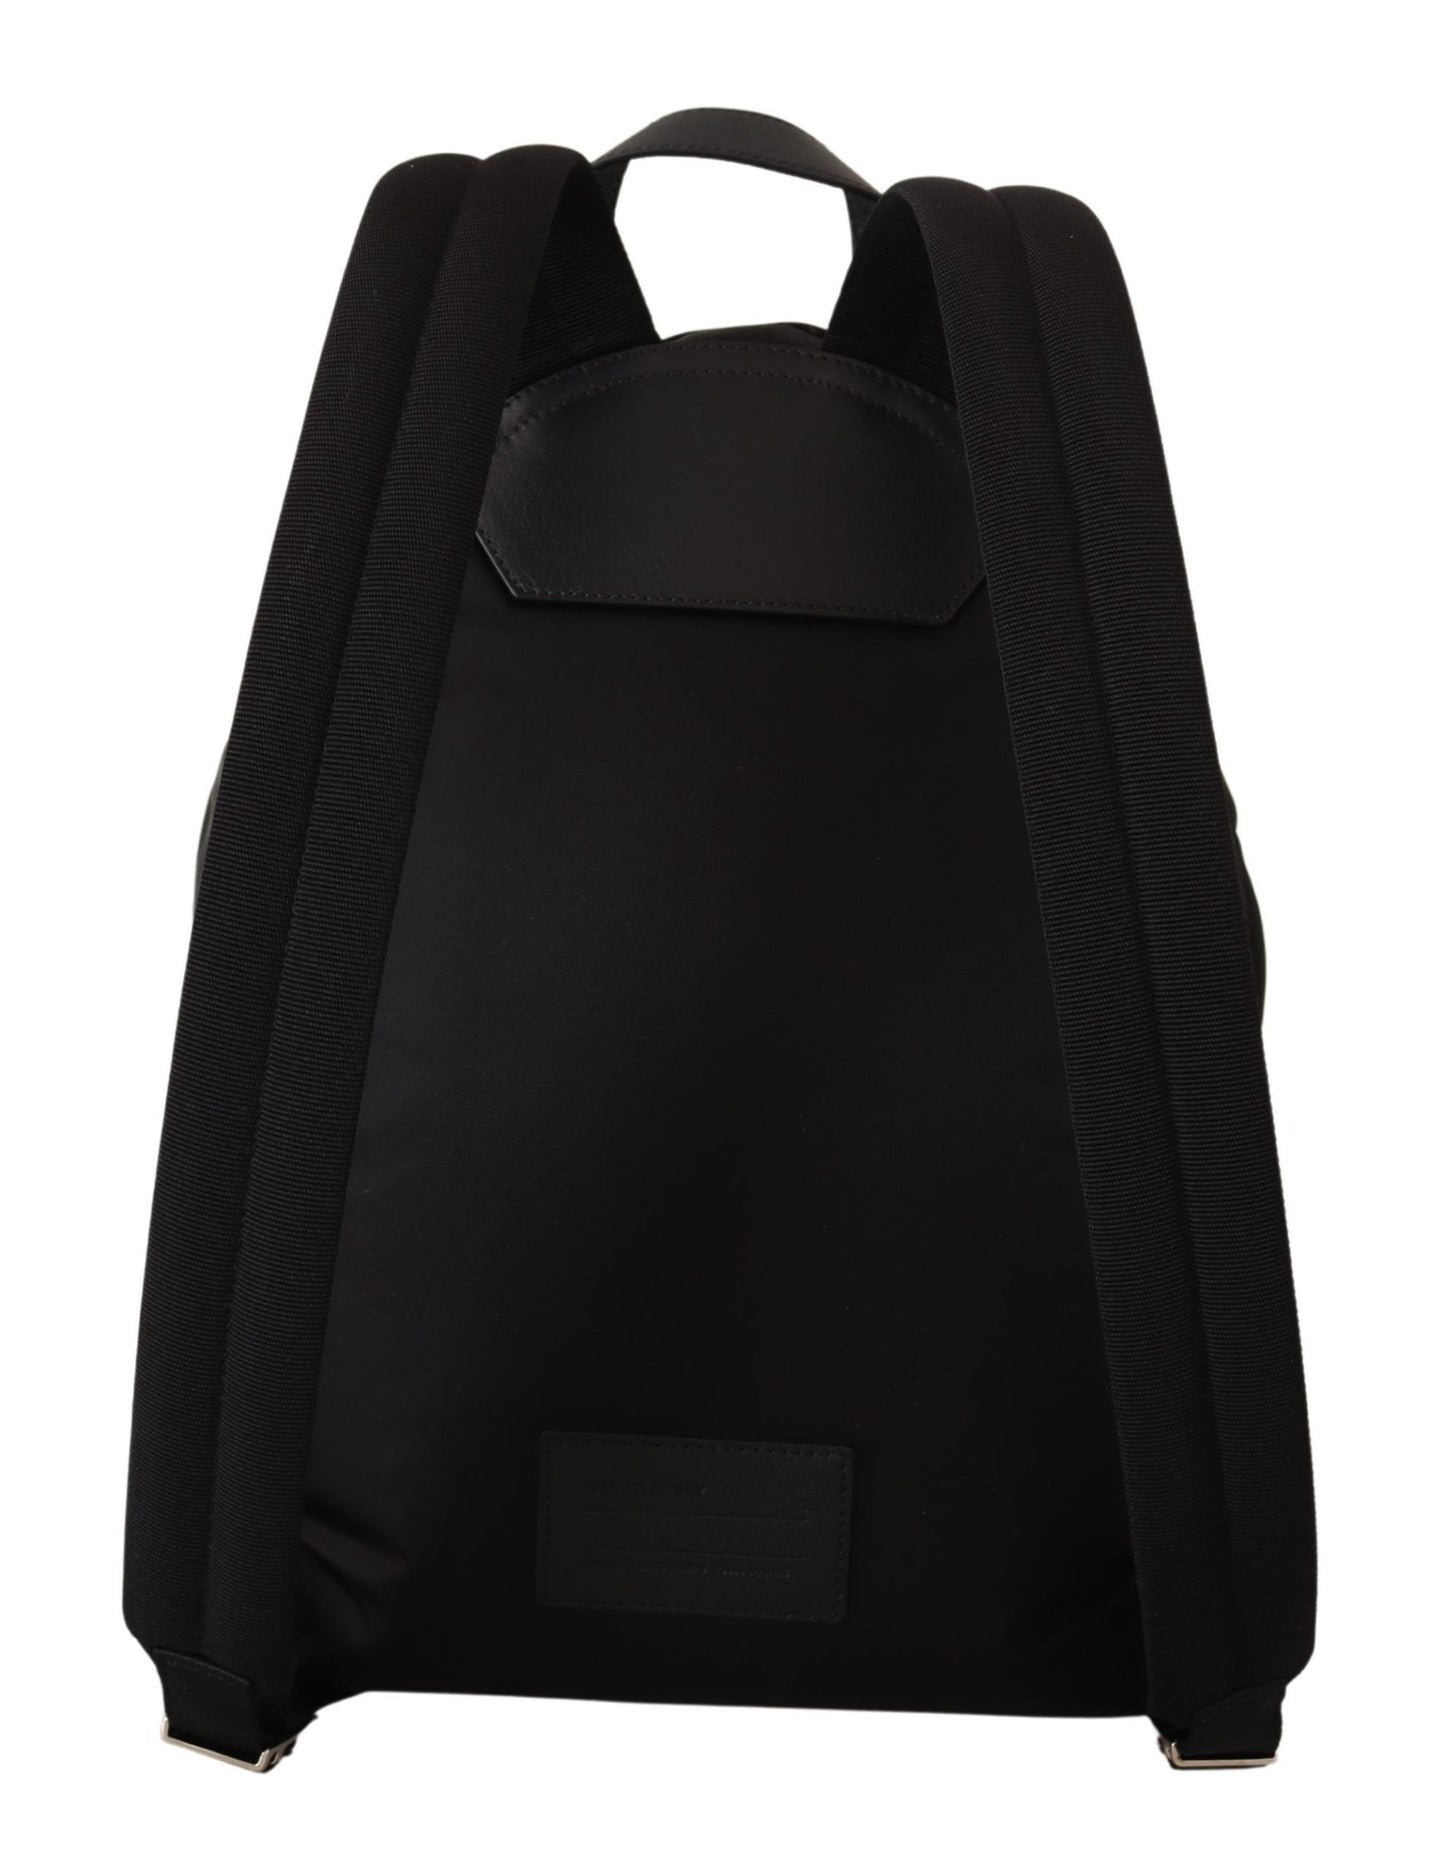 Black Nylon Urban Backpack